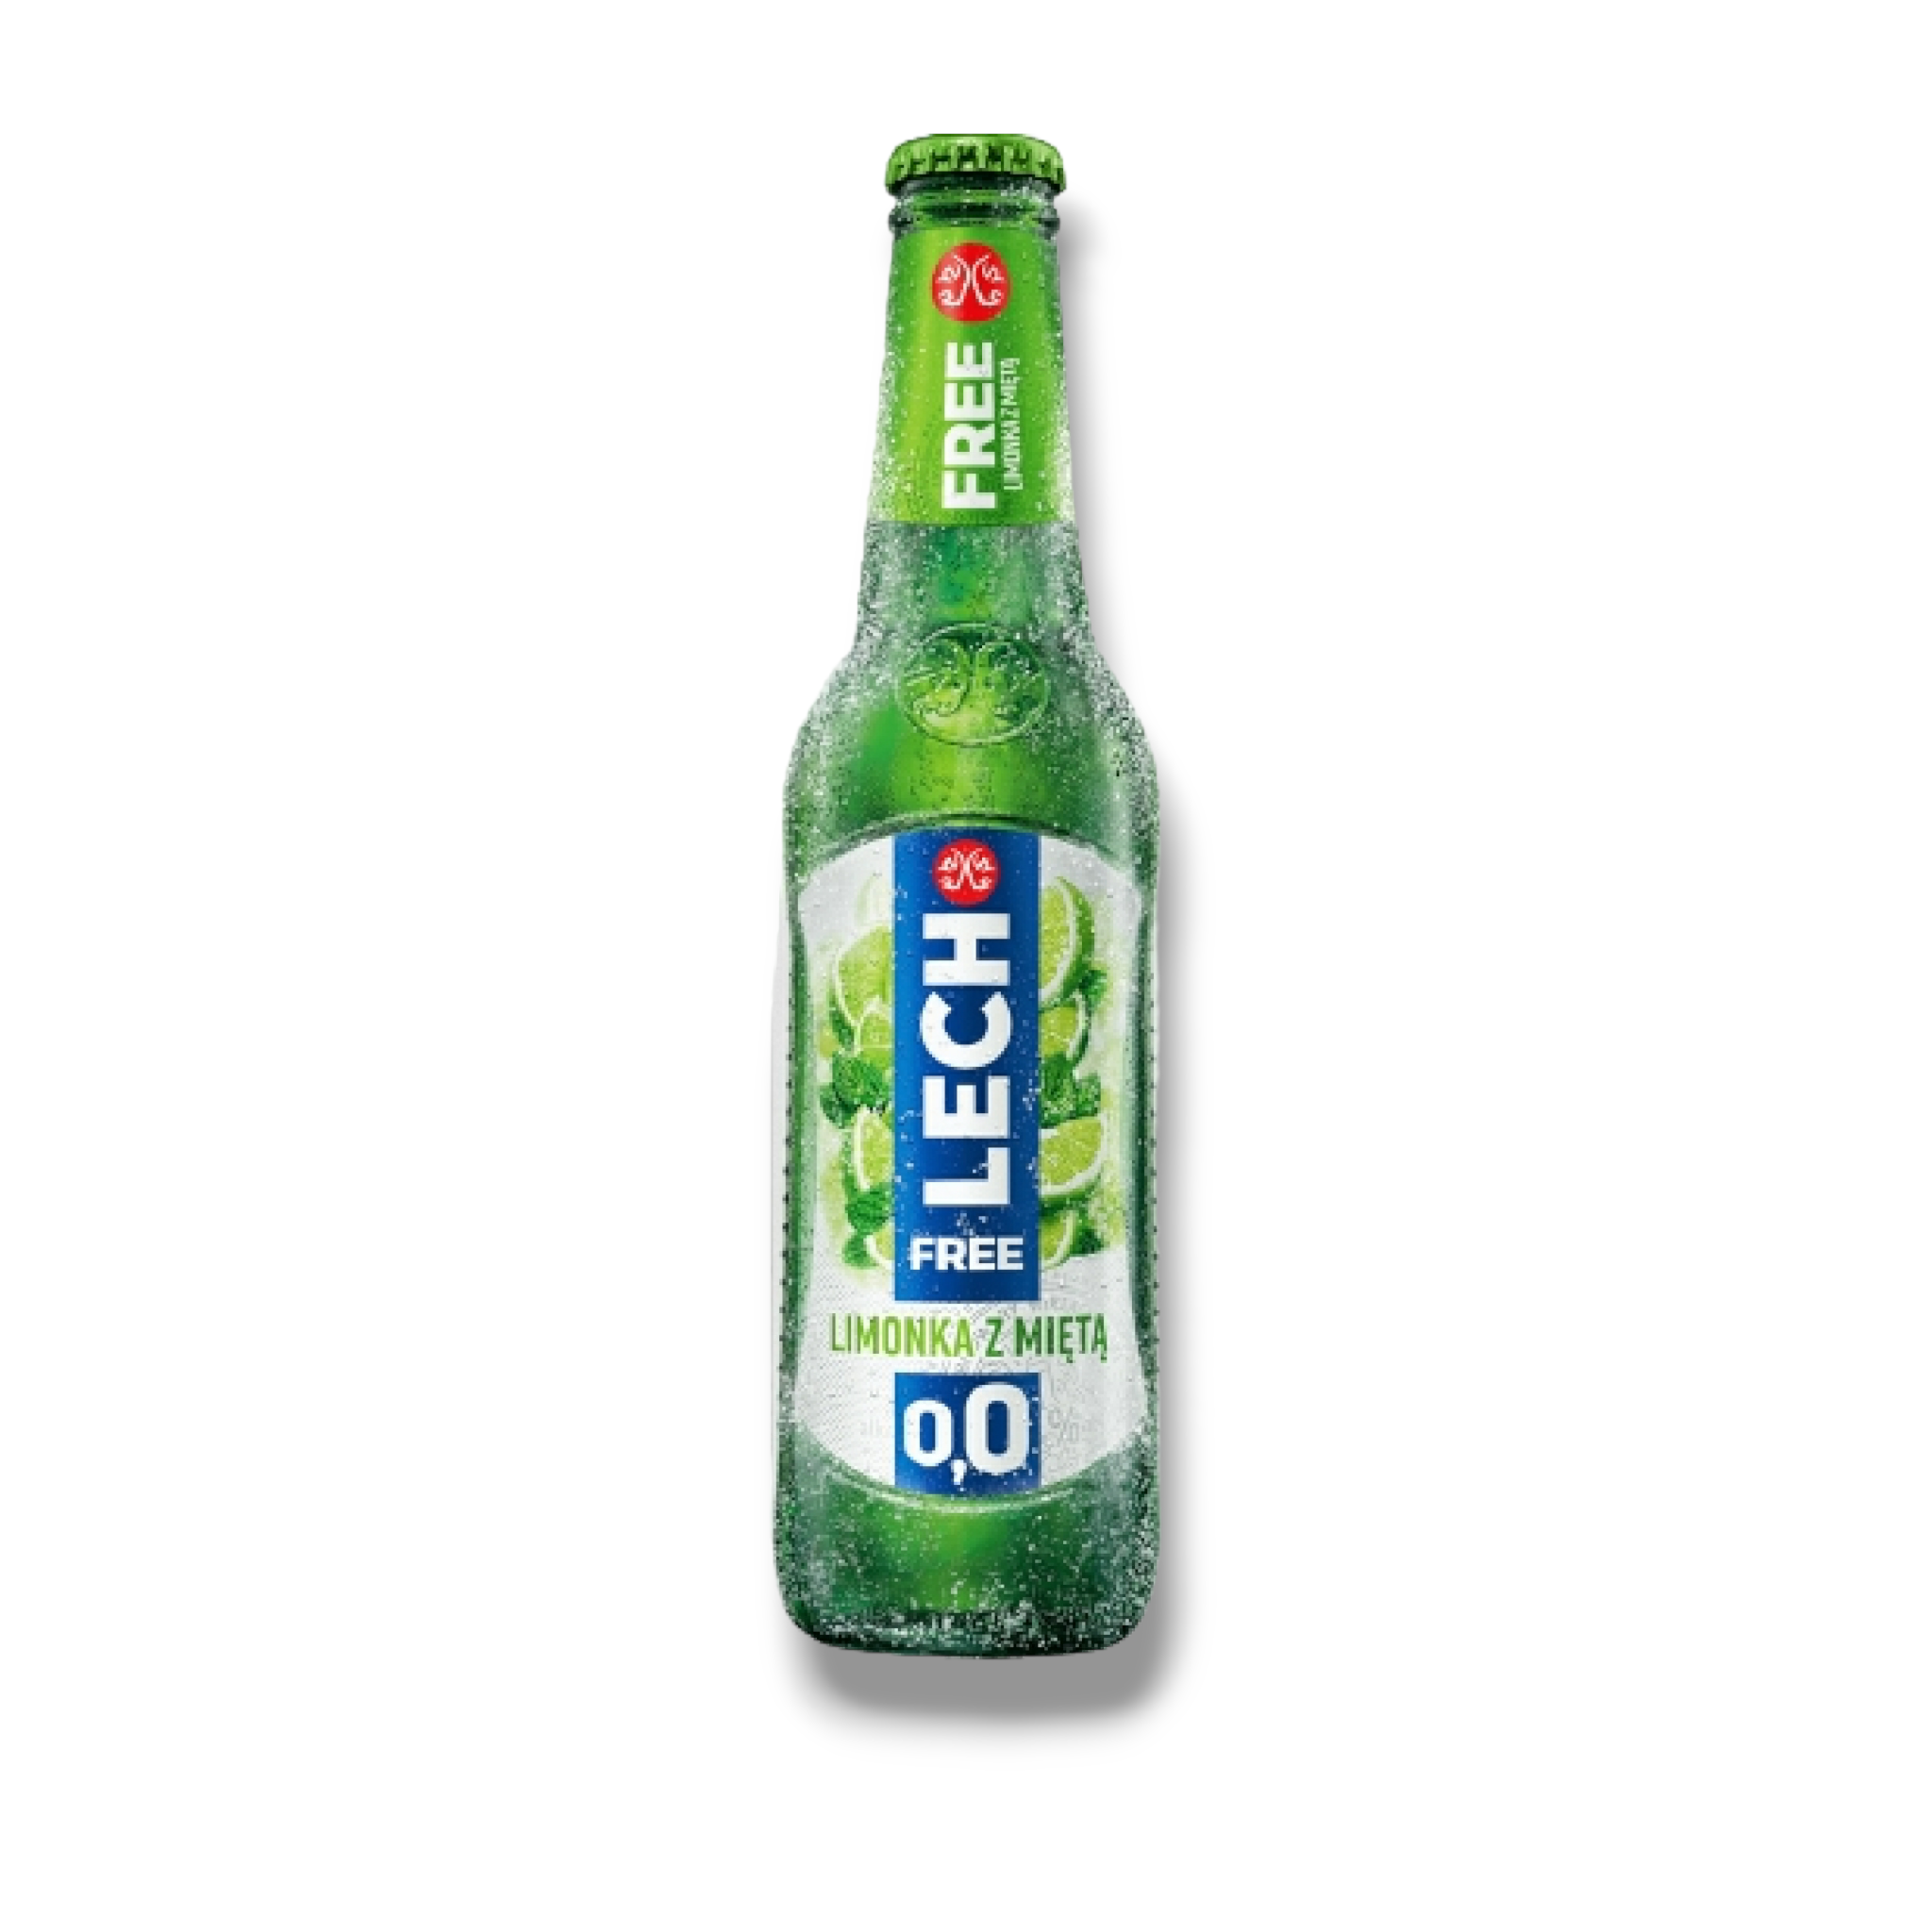 Lech free 0,33l- Limette & Minze alkoholfreies Bier aus Polen 0,0% Vol.